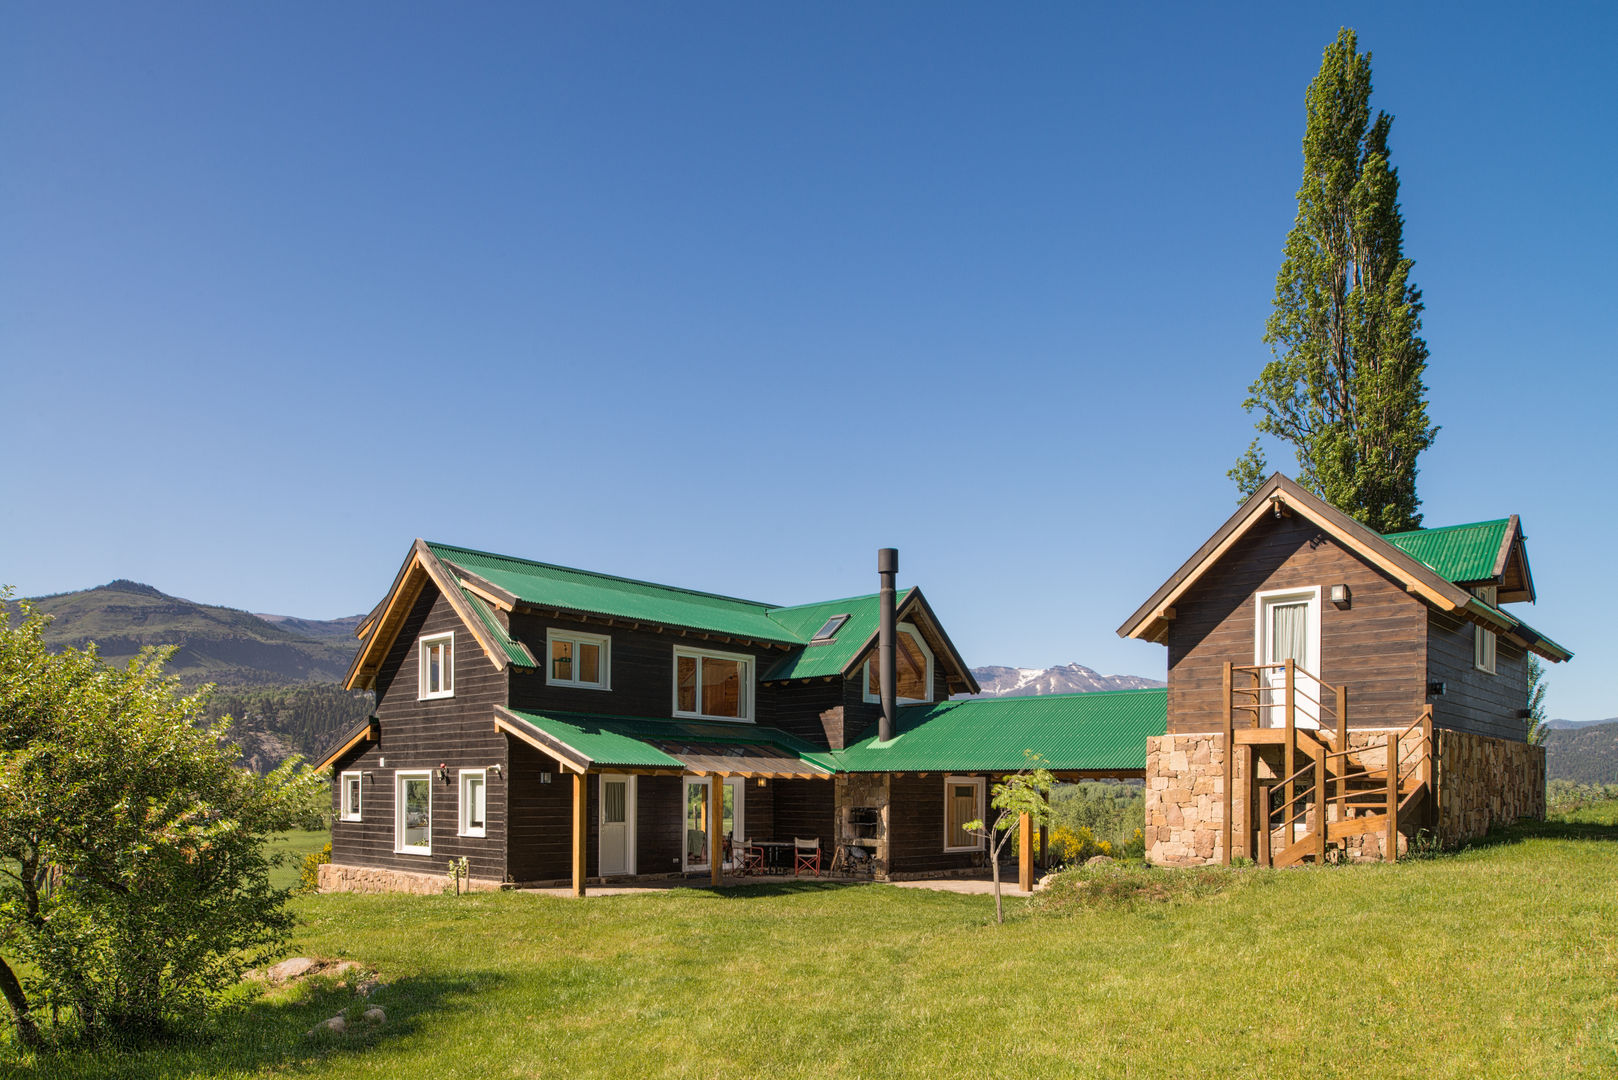 Casa de madera en San Martin de los Andes, Patagonia Log Homes - Arquitectos - Neuquén Patagonia Log Homes - Arquitectos - Neuquén Деревянные дома Твердая древесина Многоцветный